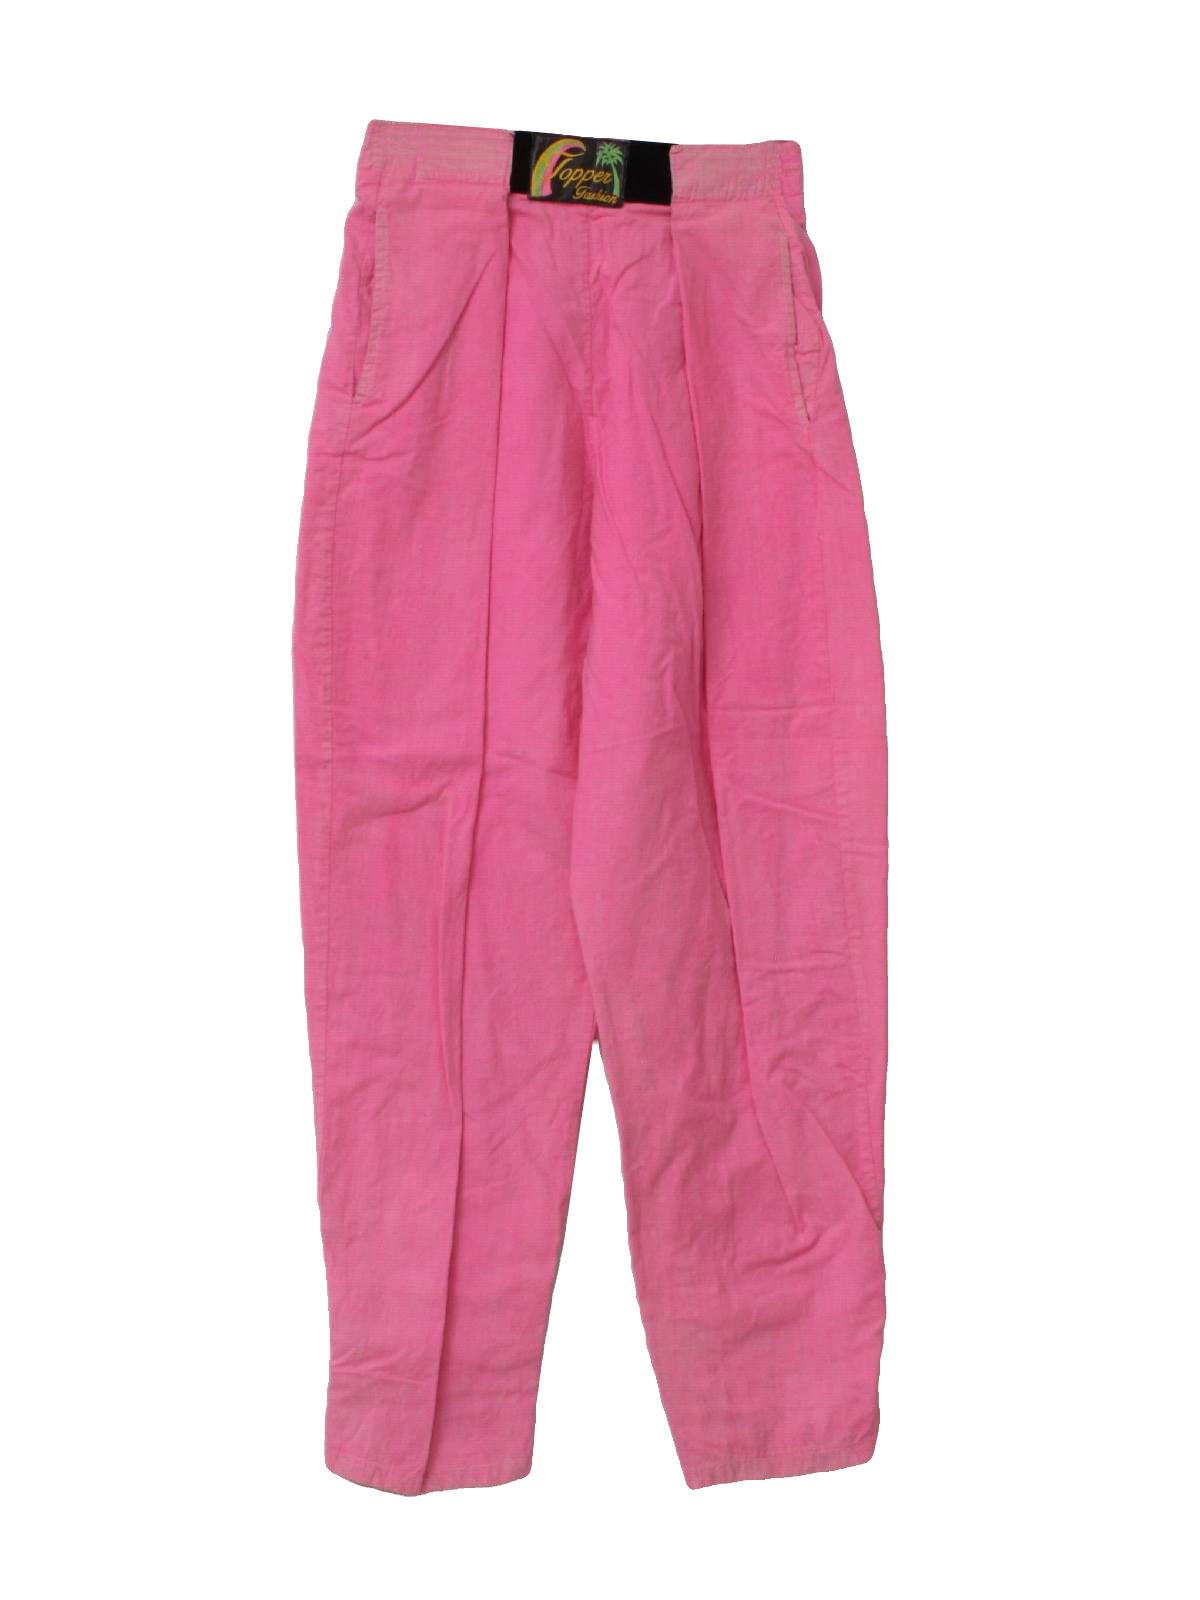 Retro 80's Pants: 80s -Topper Fashion- Mens hot pink cotton, high waist ...